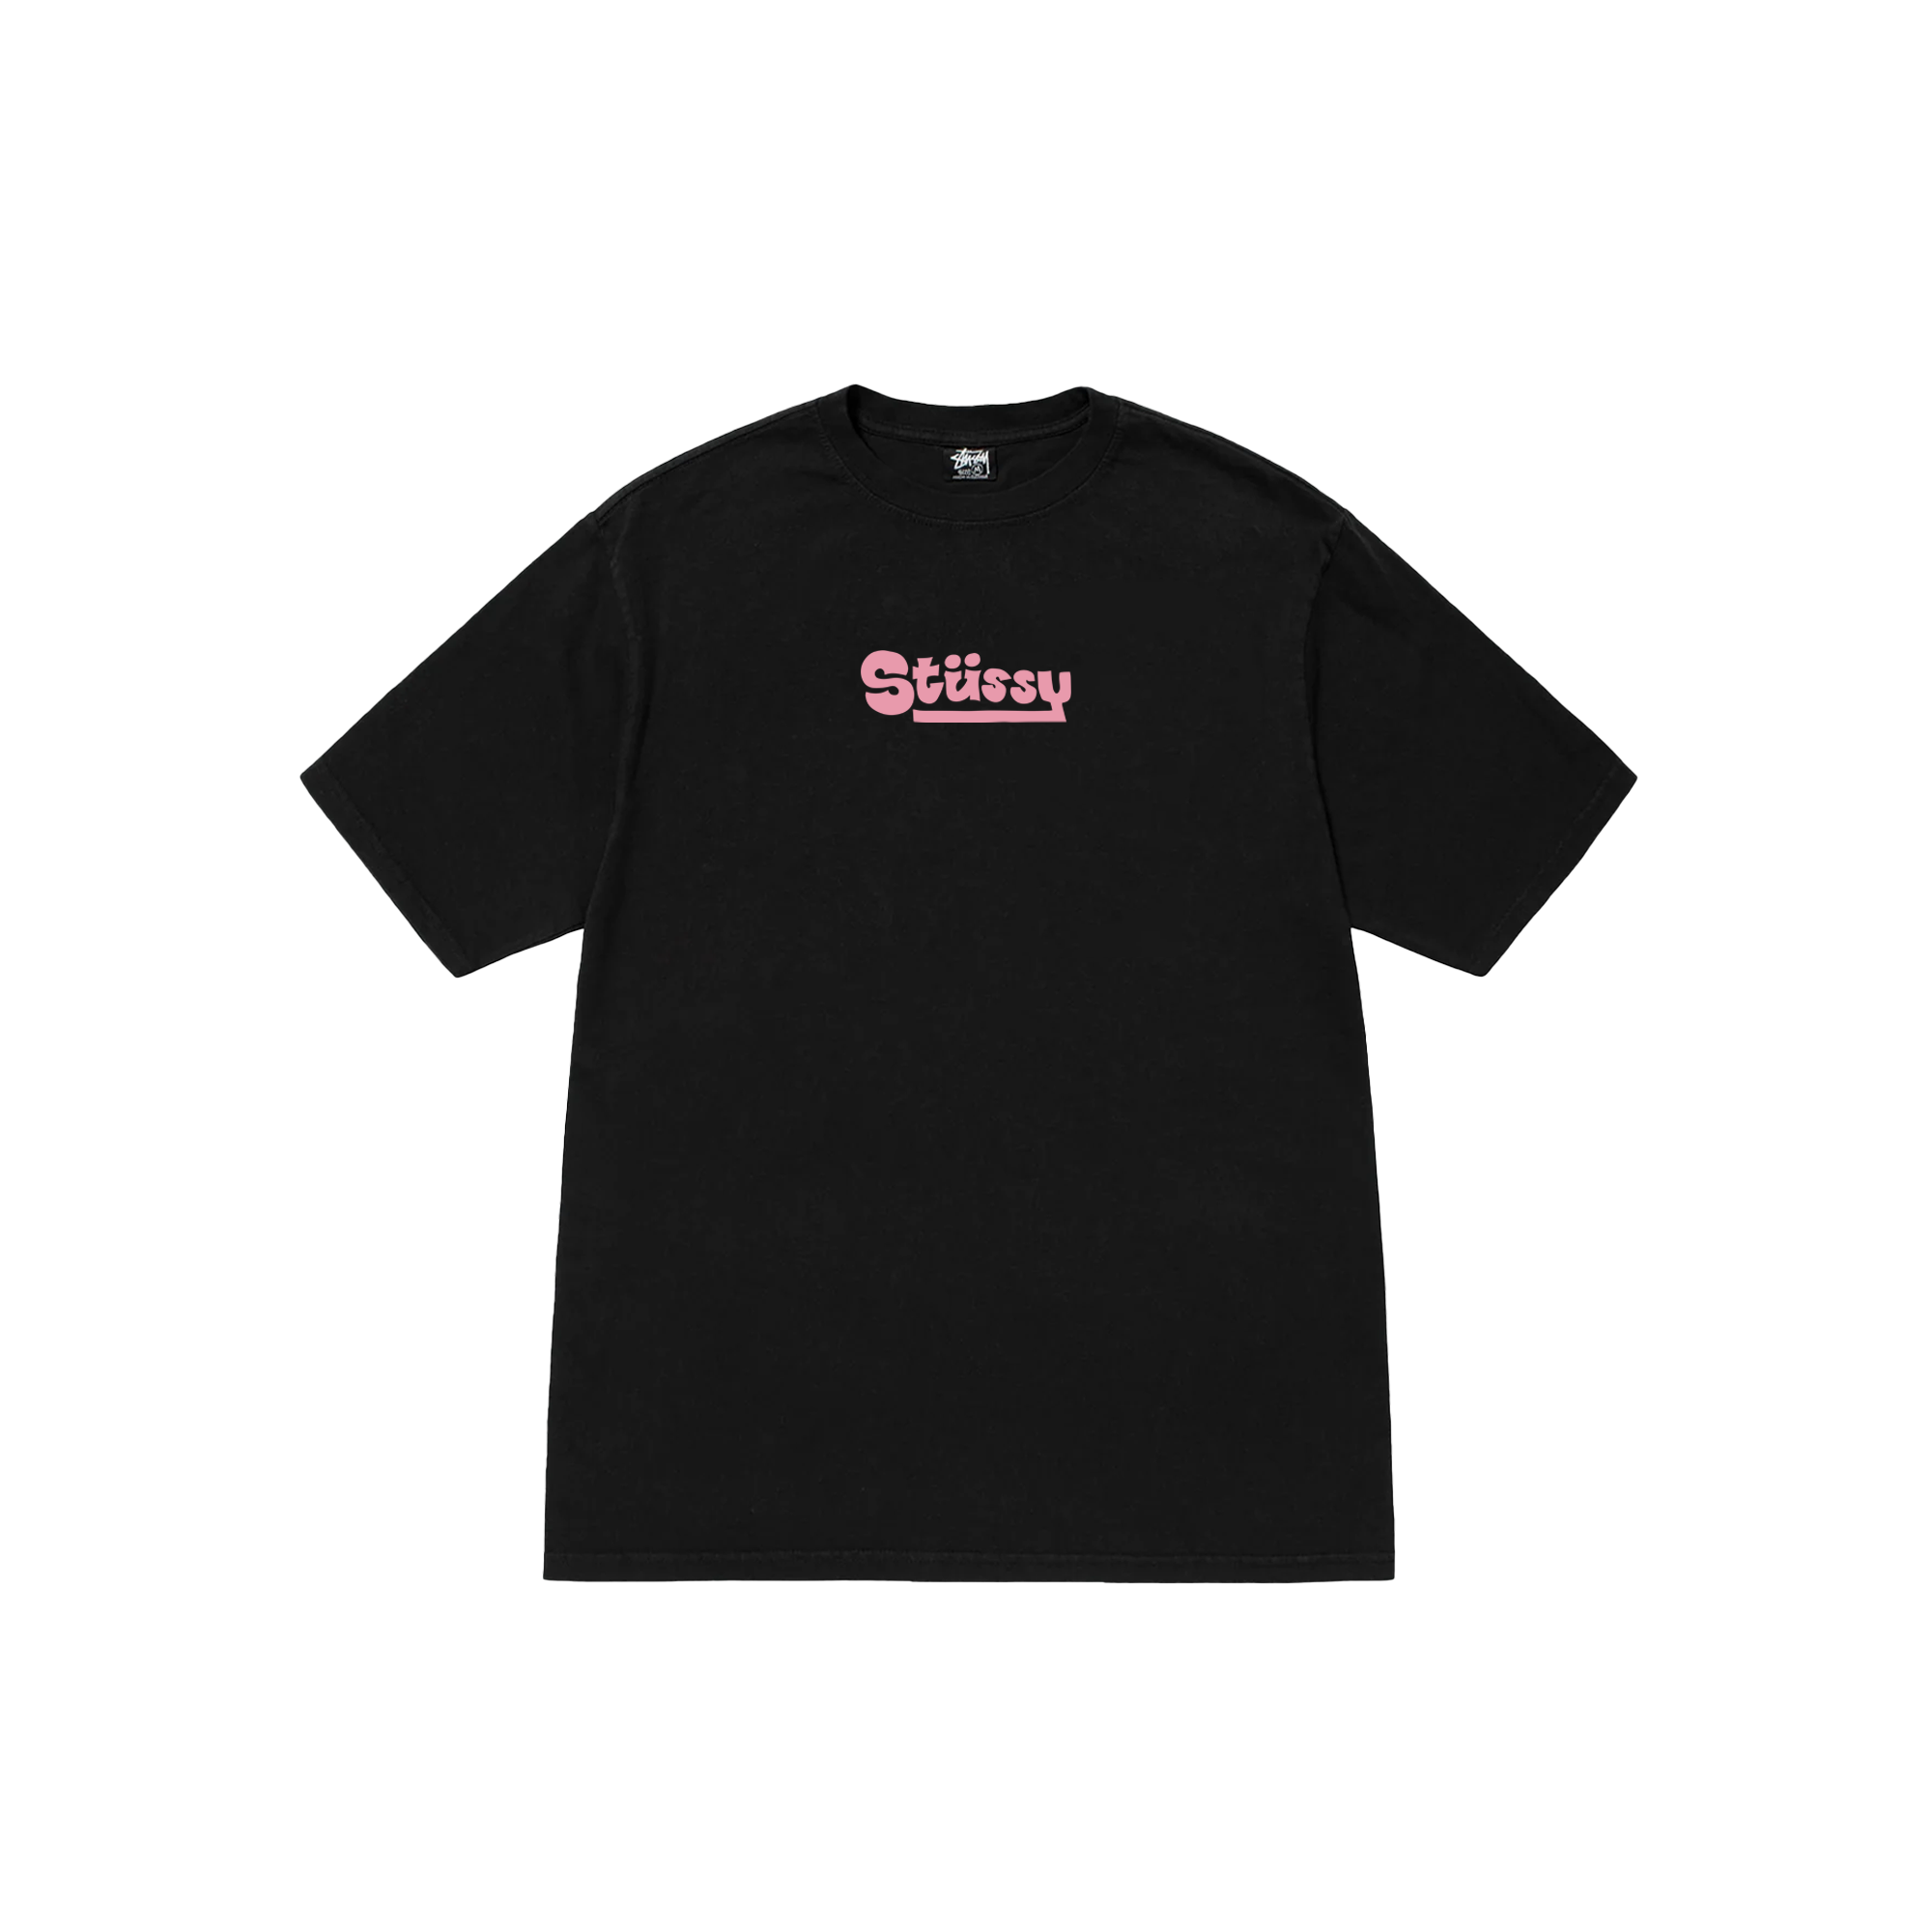 Stussy Floral PinkThings T-Shirt